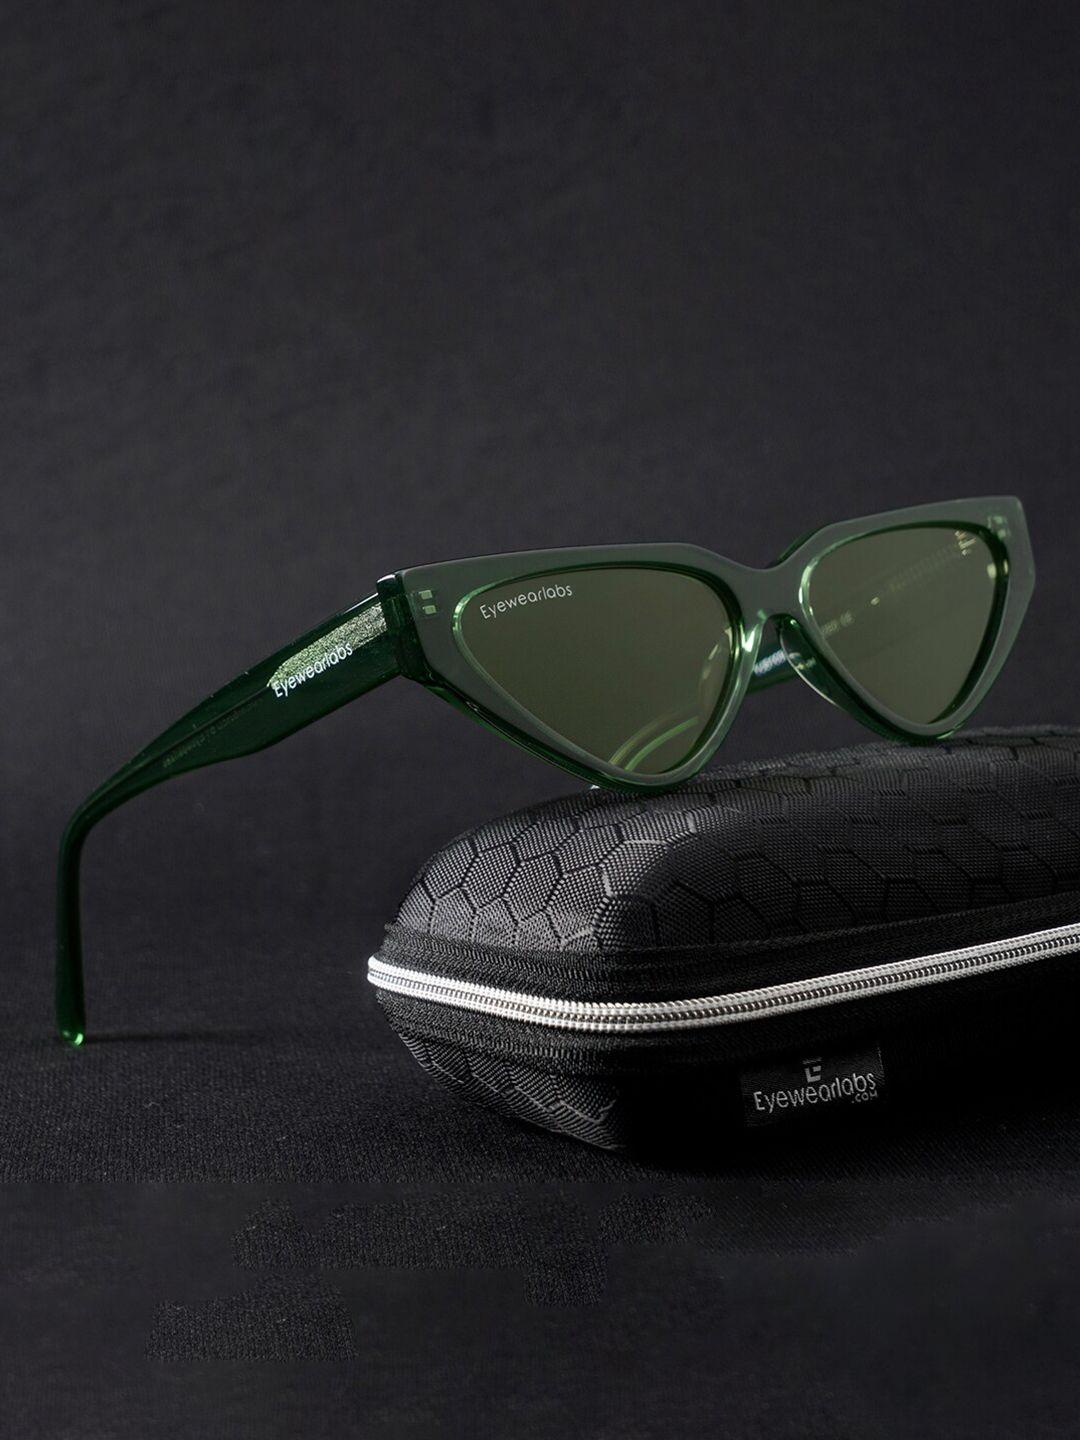 eyewearlabs women lens & cateye sunglasses with uv protected lens cblairgrsc2el1180